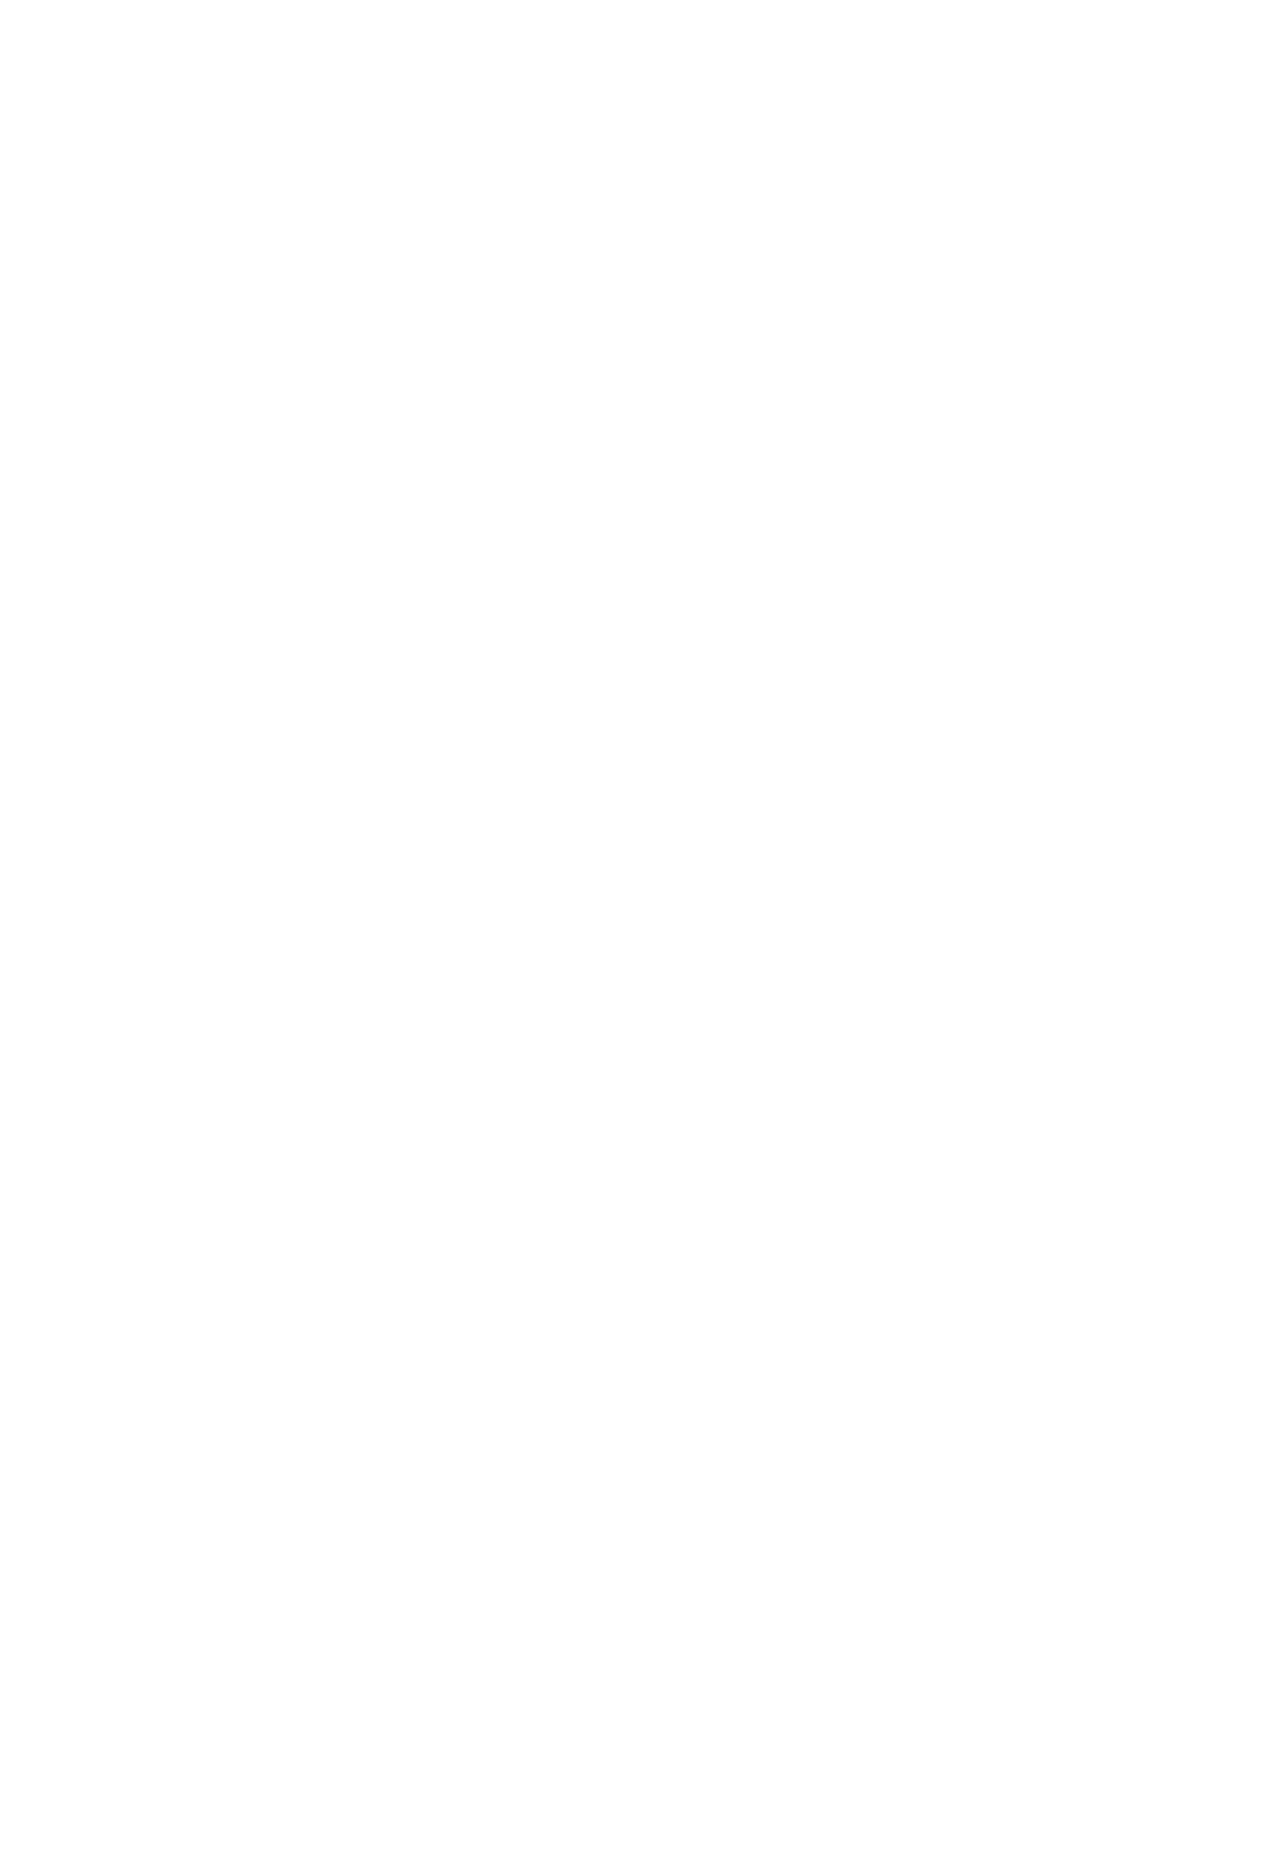 NUMENS 's web page